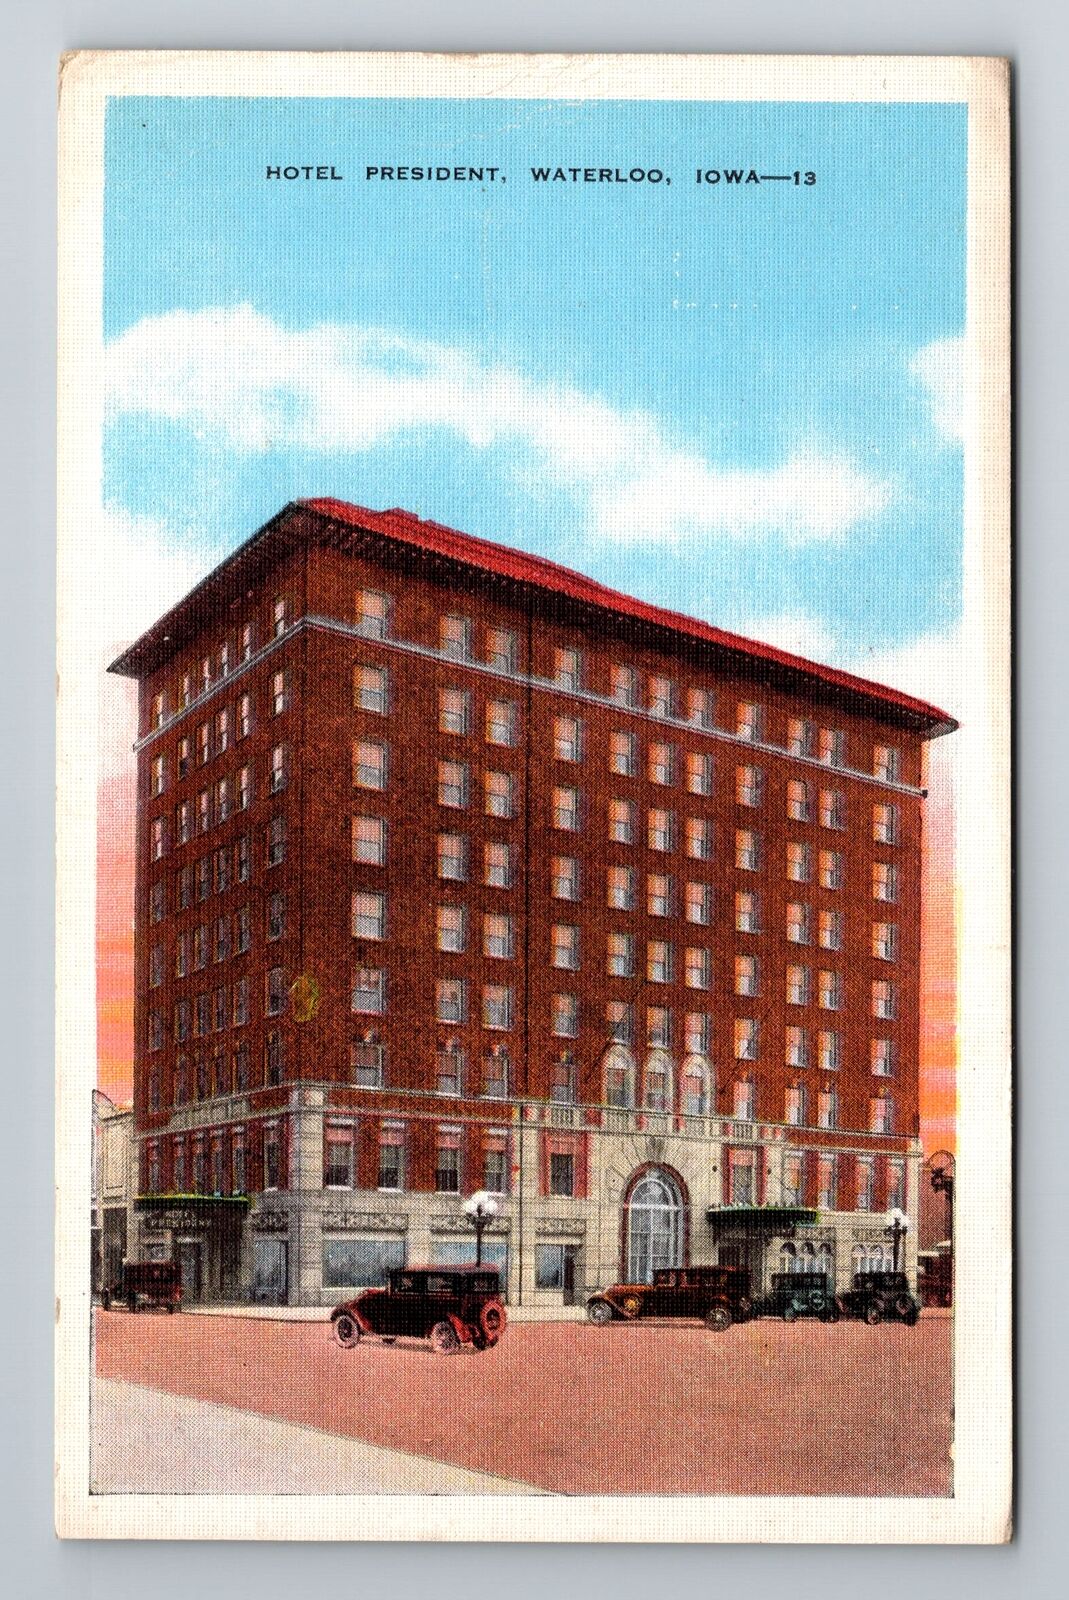 Waterloo IA-Iowa, Hotel President, Advertising, Antique, Vintage Postcard